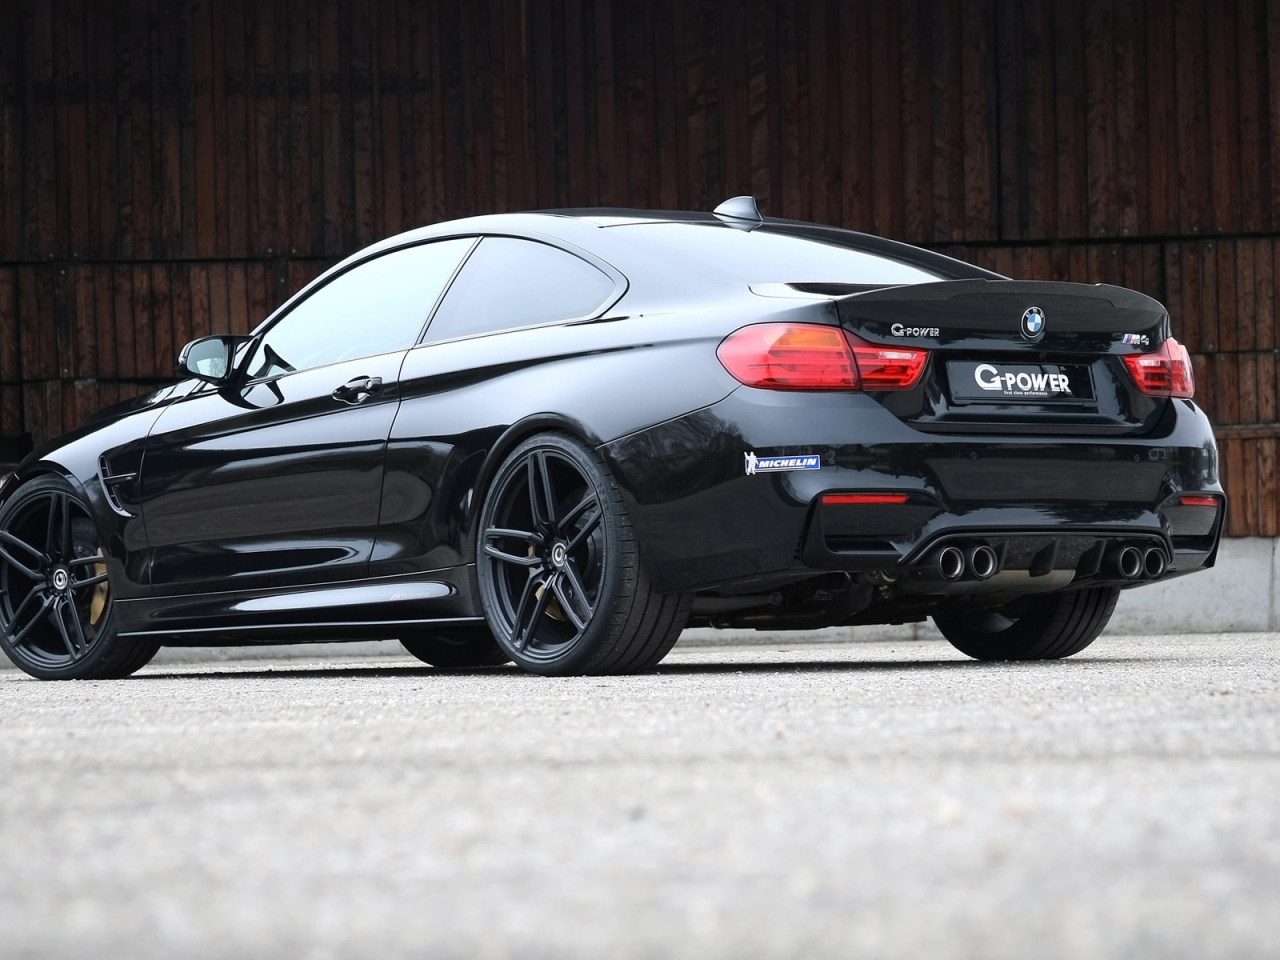 Black BMW M4 G-Power 2014 Rear for 1280 x 960 resolution